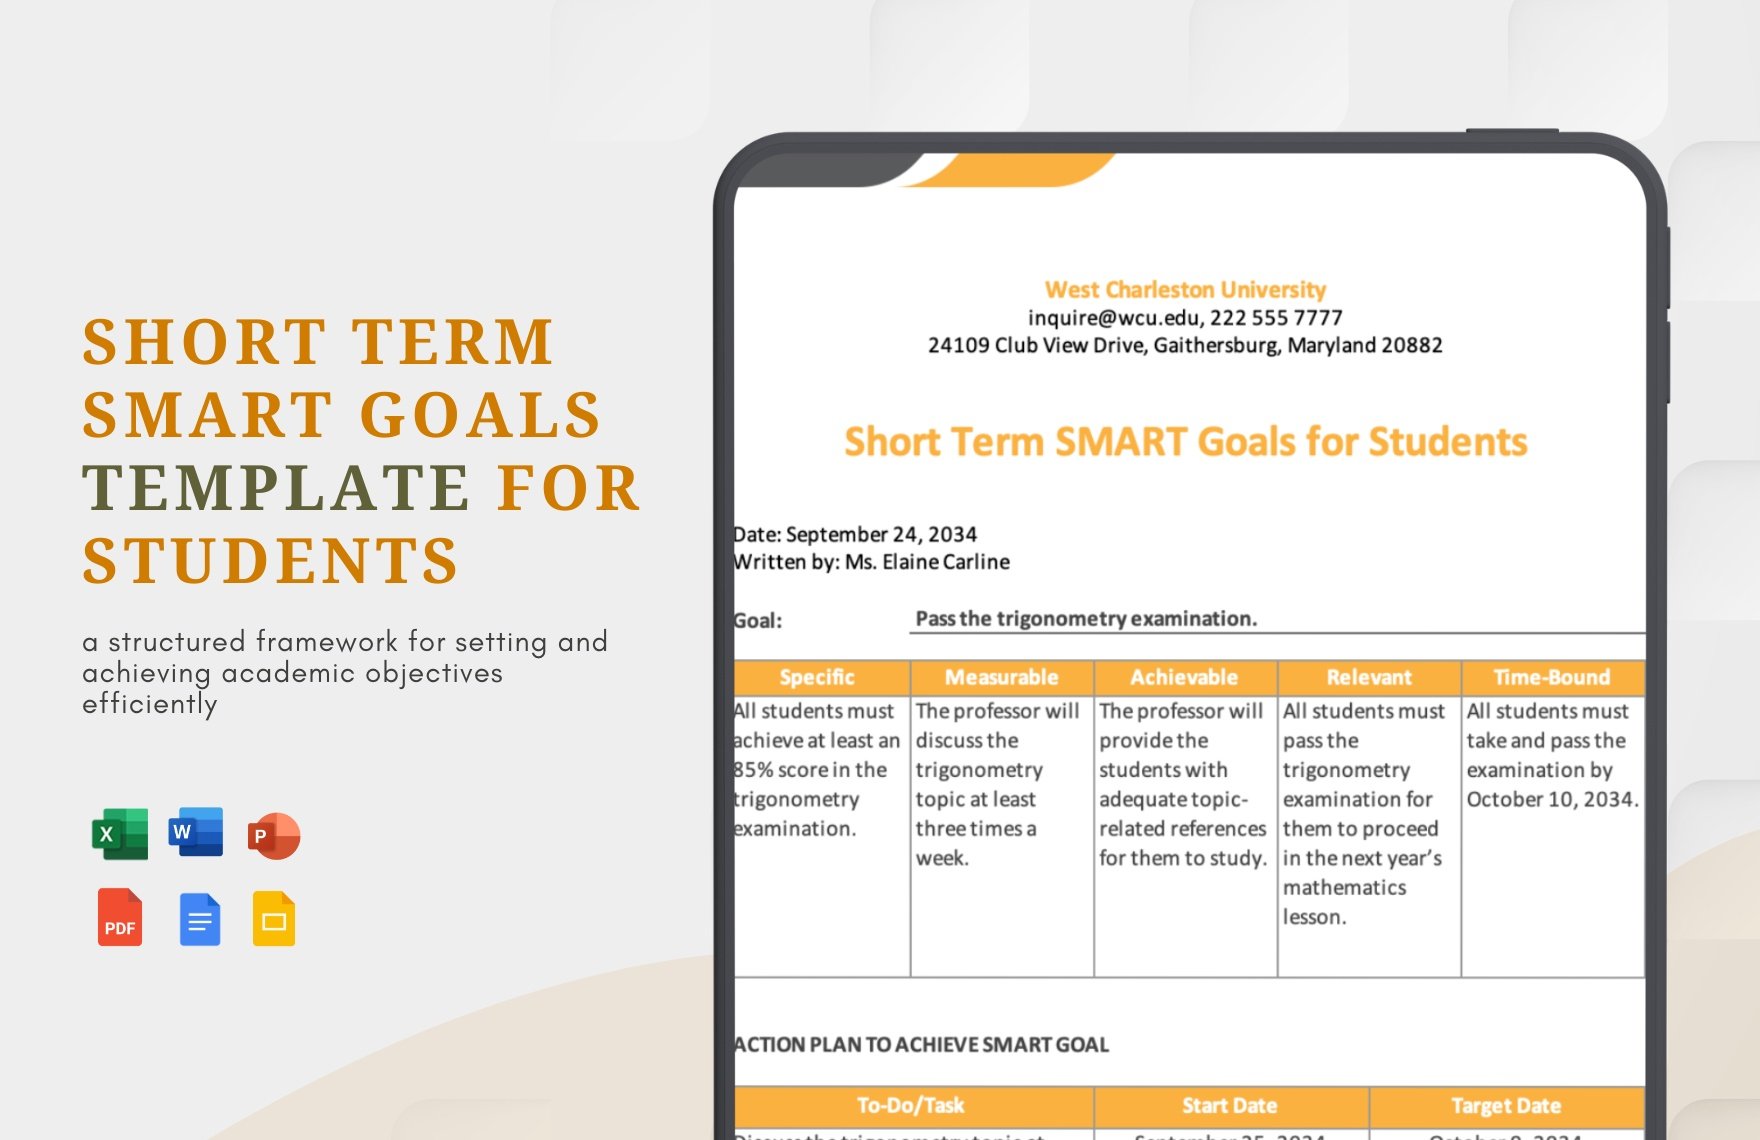 Short Term Smart Goals Template for Students